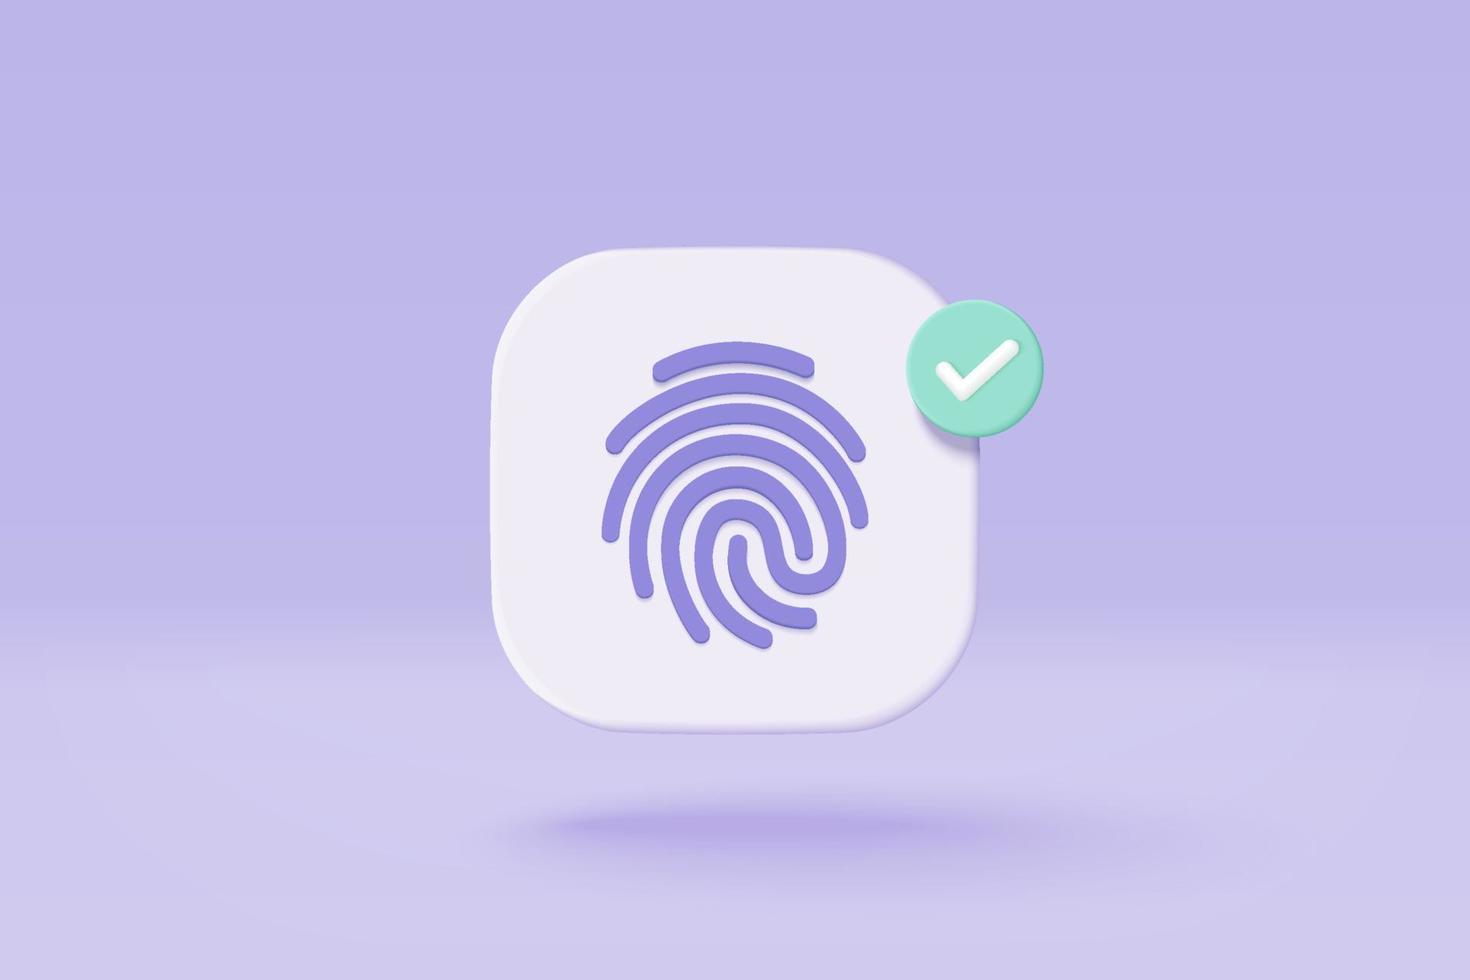 3d fingerprint cyber secure icon. Digital security authentication concept. finger scan for authorization, identity. 3d fingerprint scanning sign vector render illustration on purple background